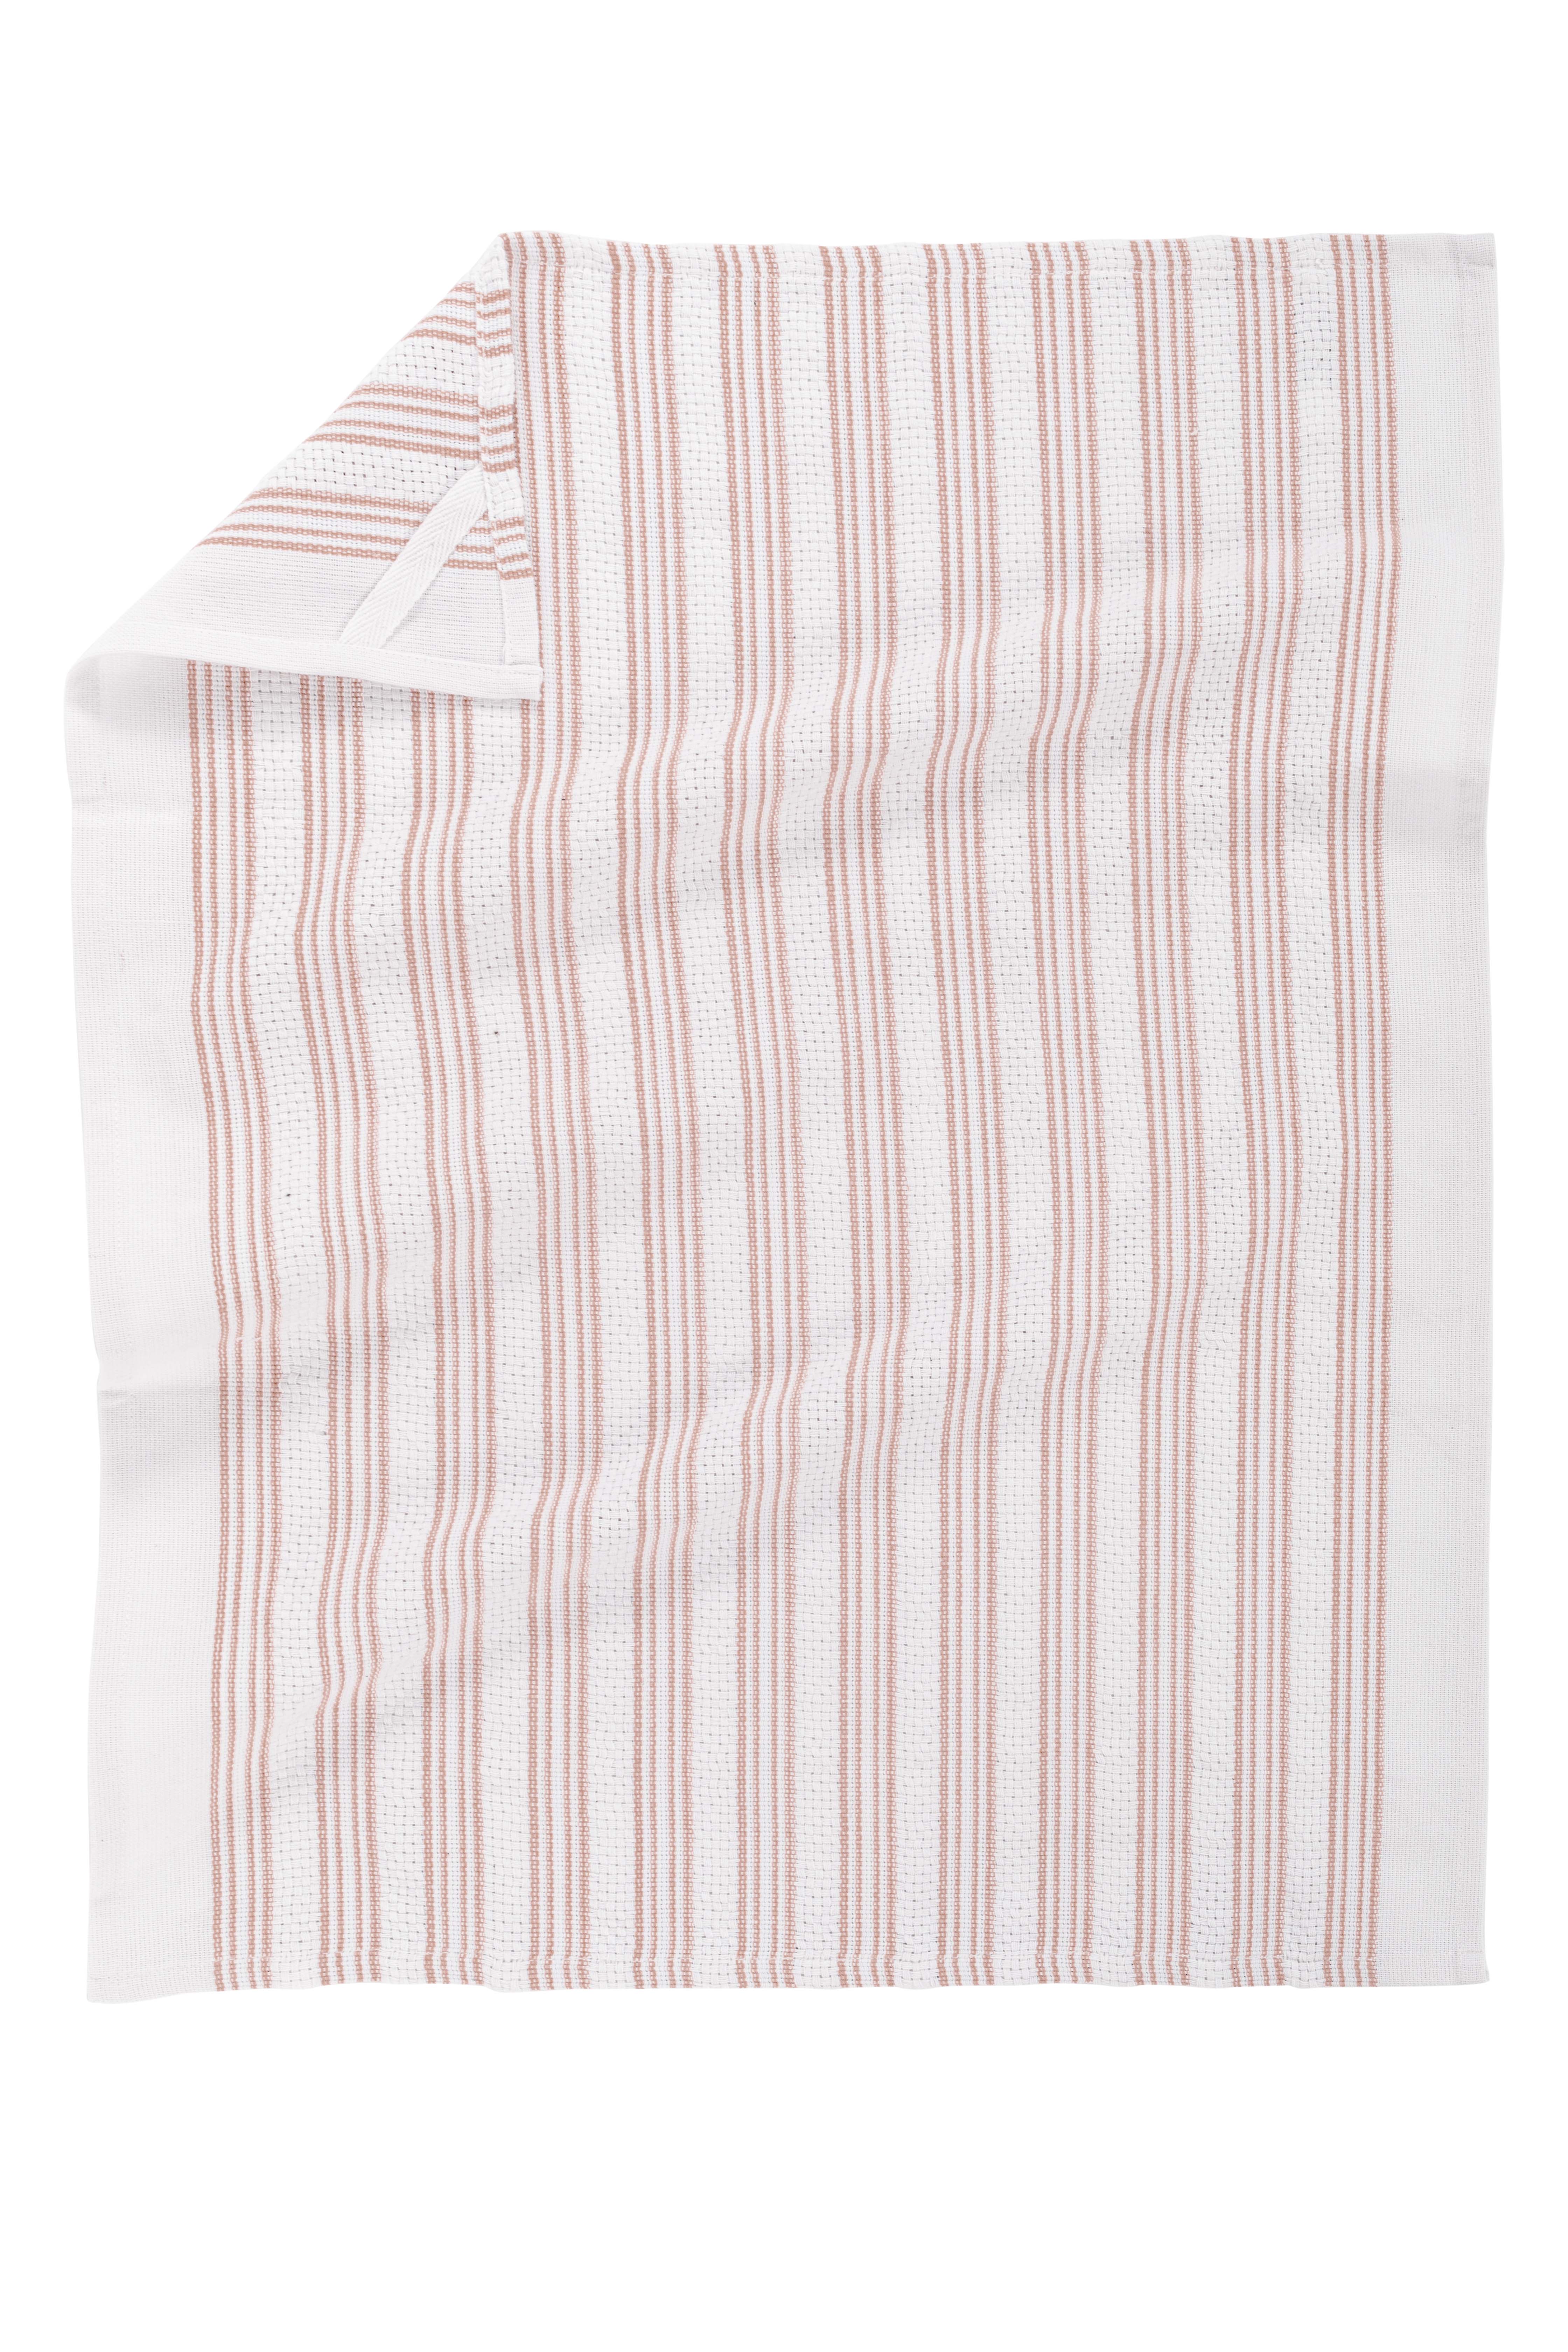 Kitchen towel BASKET WEAVE 50x70cm - set/3 - pink